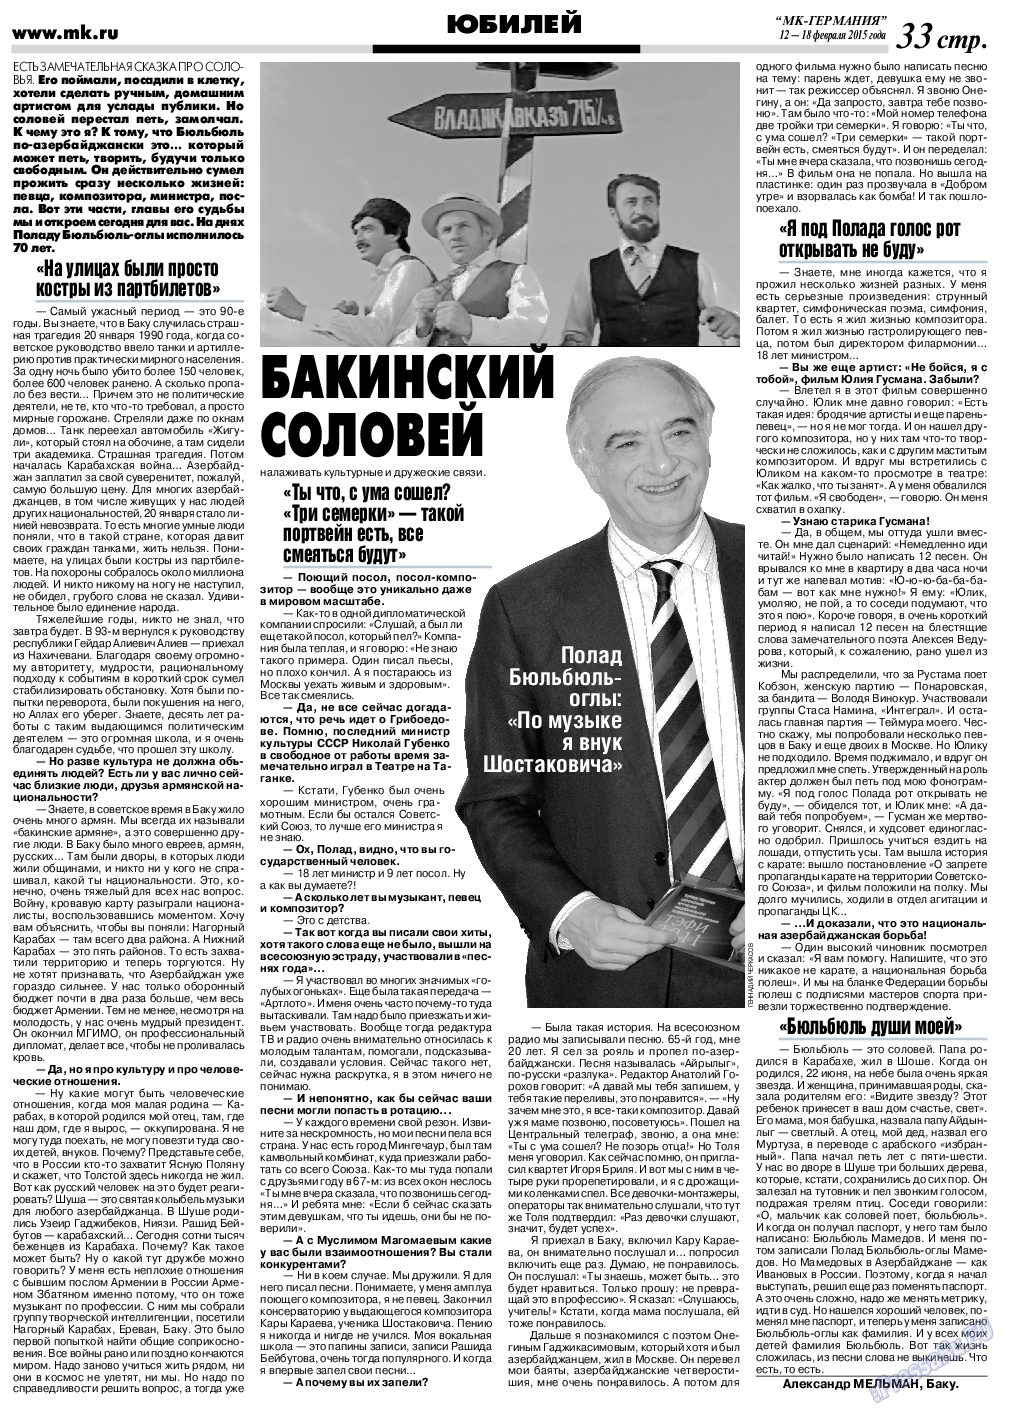 МК-Германия, газета. 2015 №7 стр.33